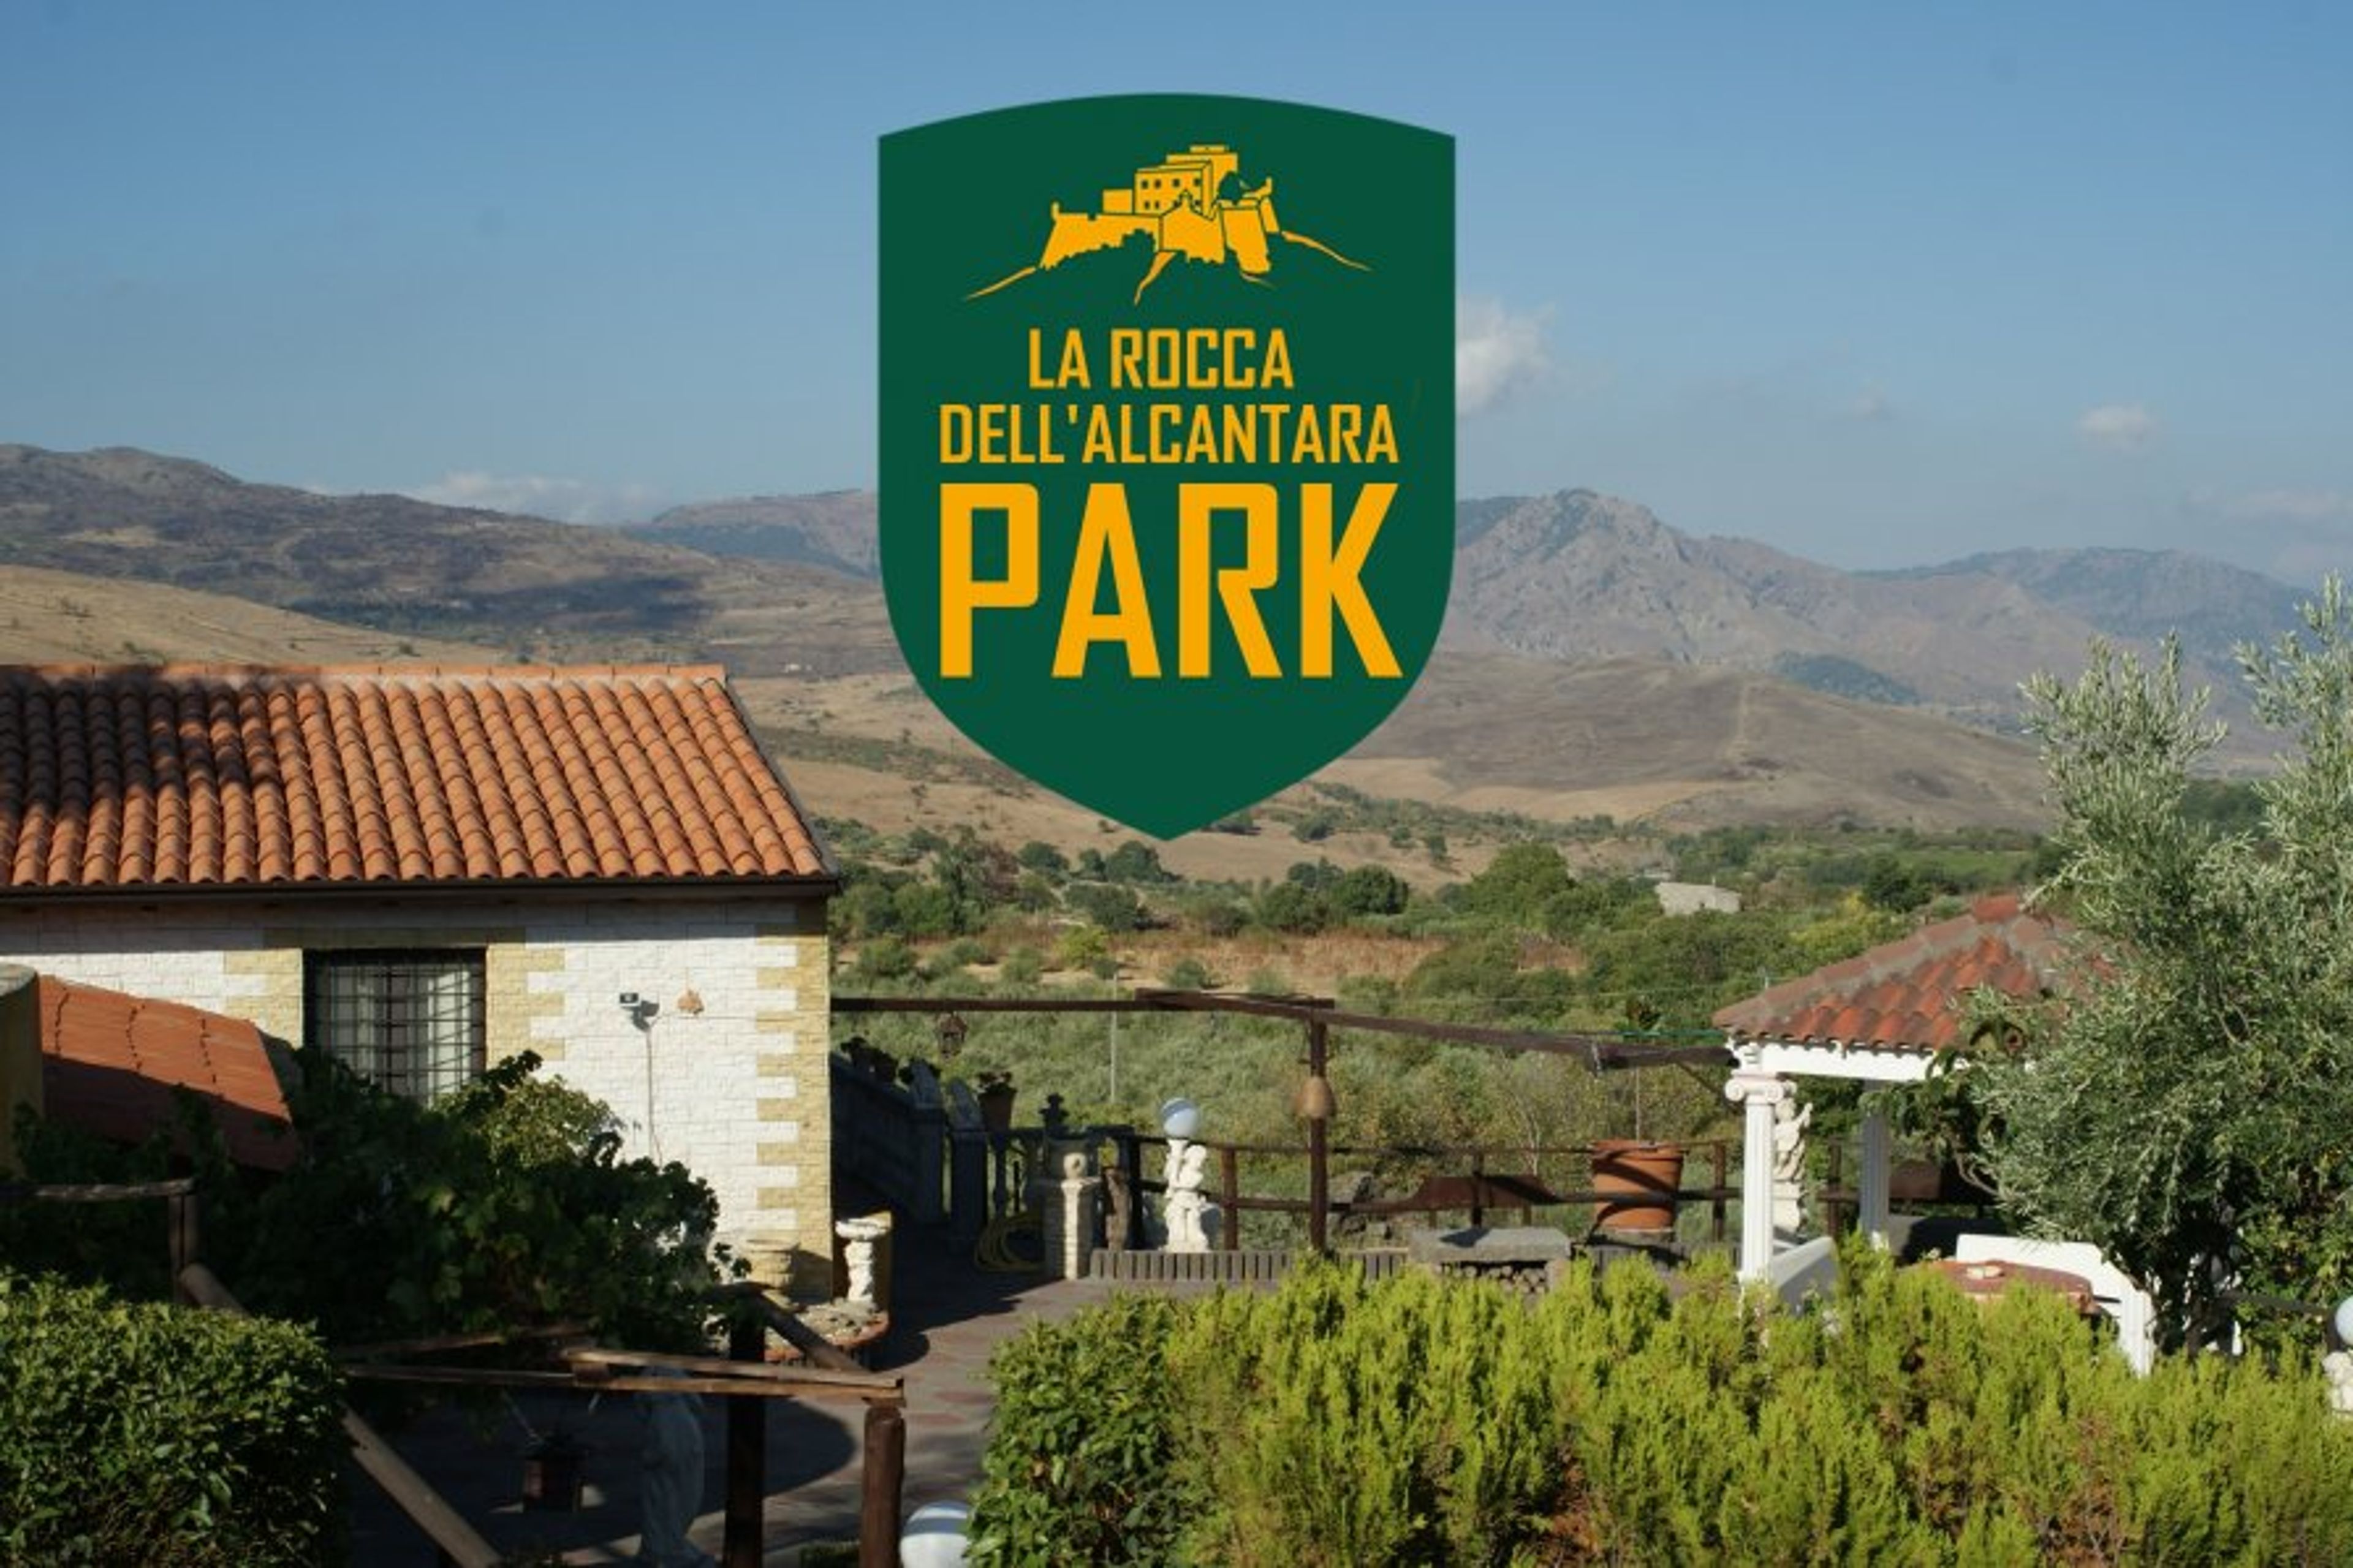 La Rocca Dell' Alcantara Park